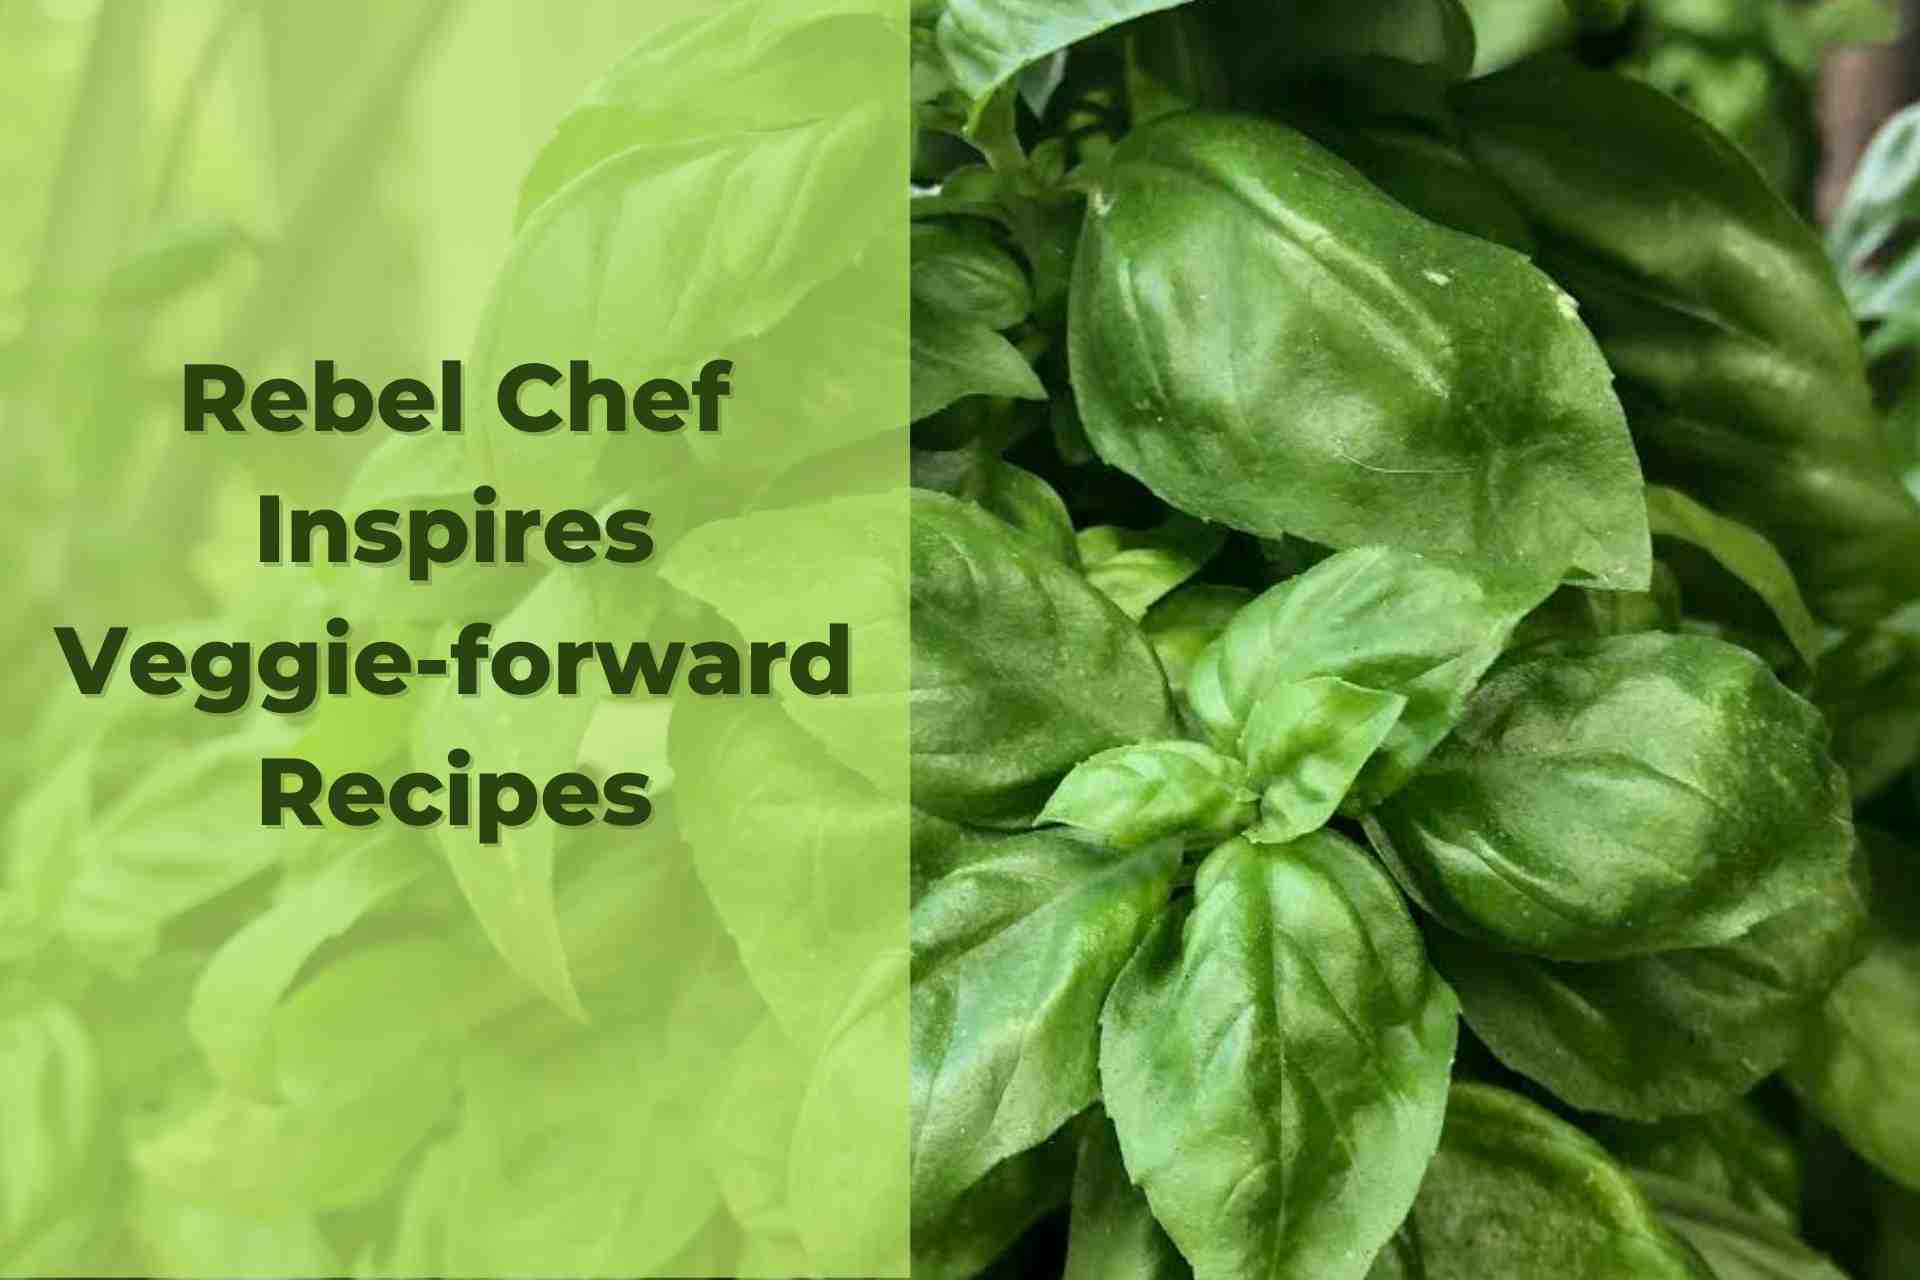 Rebel Chef Inspires Delicious Veggie-forward Recipes